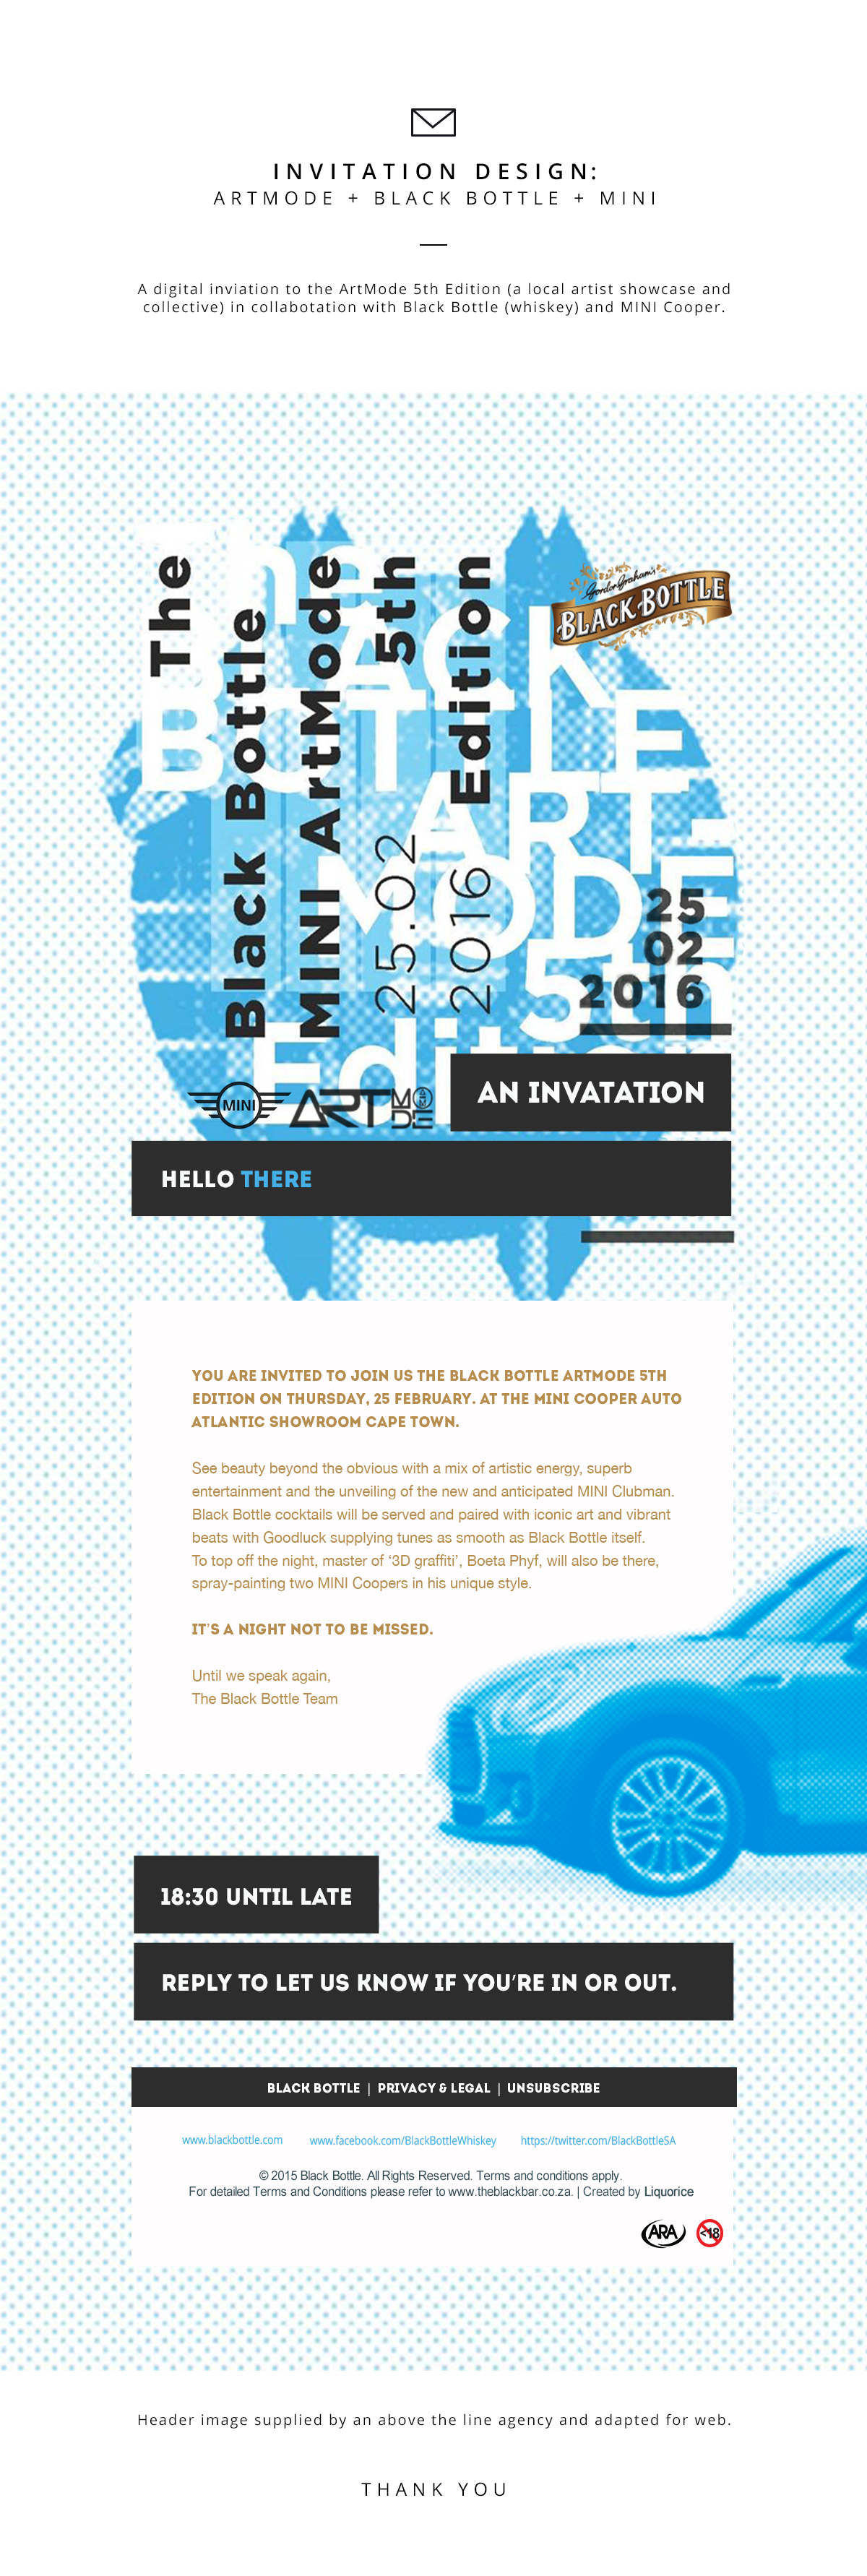 Invitation mailer digital newsletter alcohol car MINI Cooper collage Whiskey design